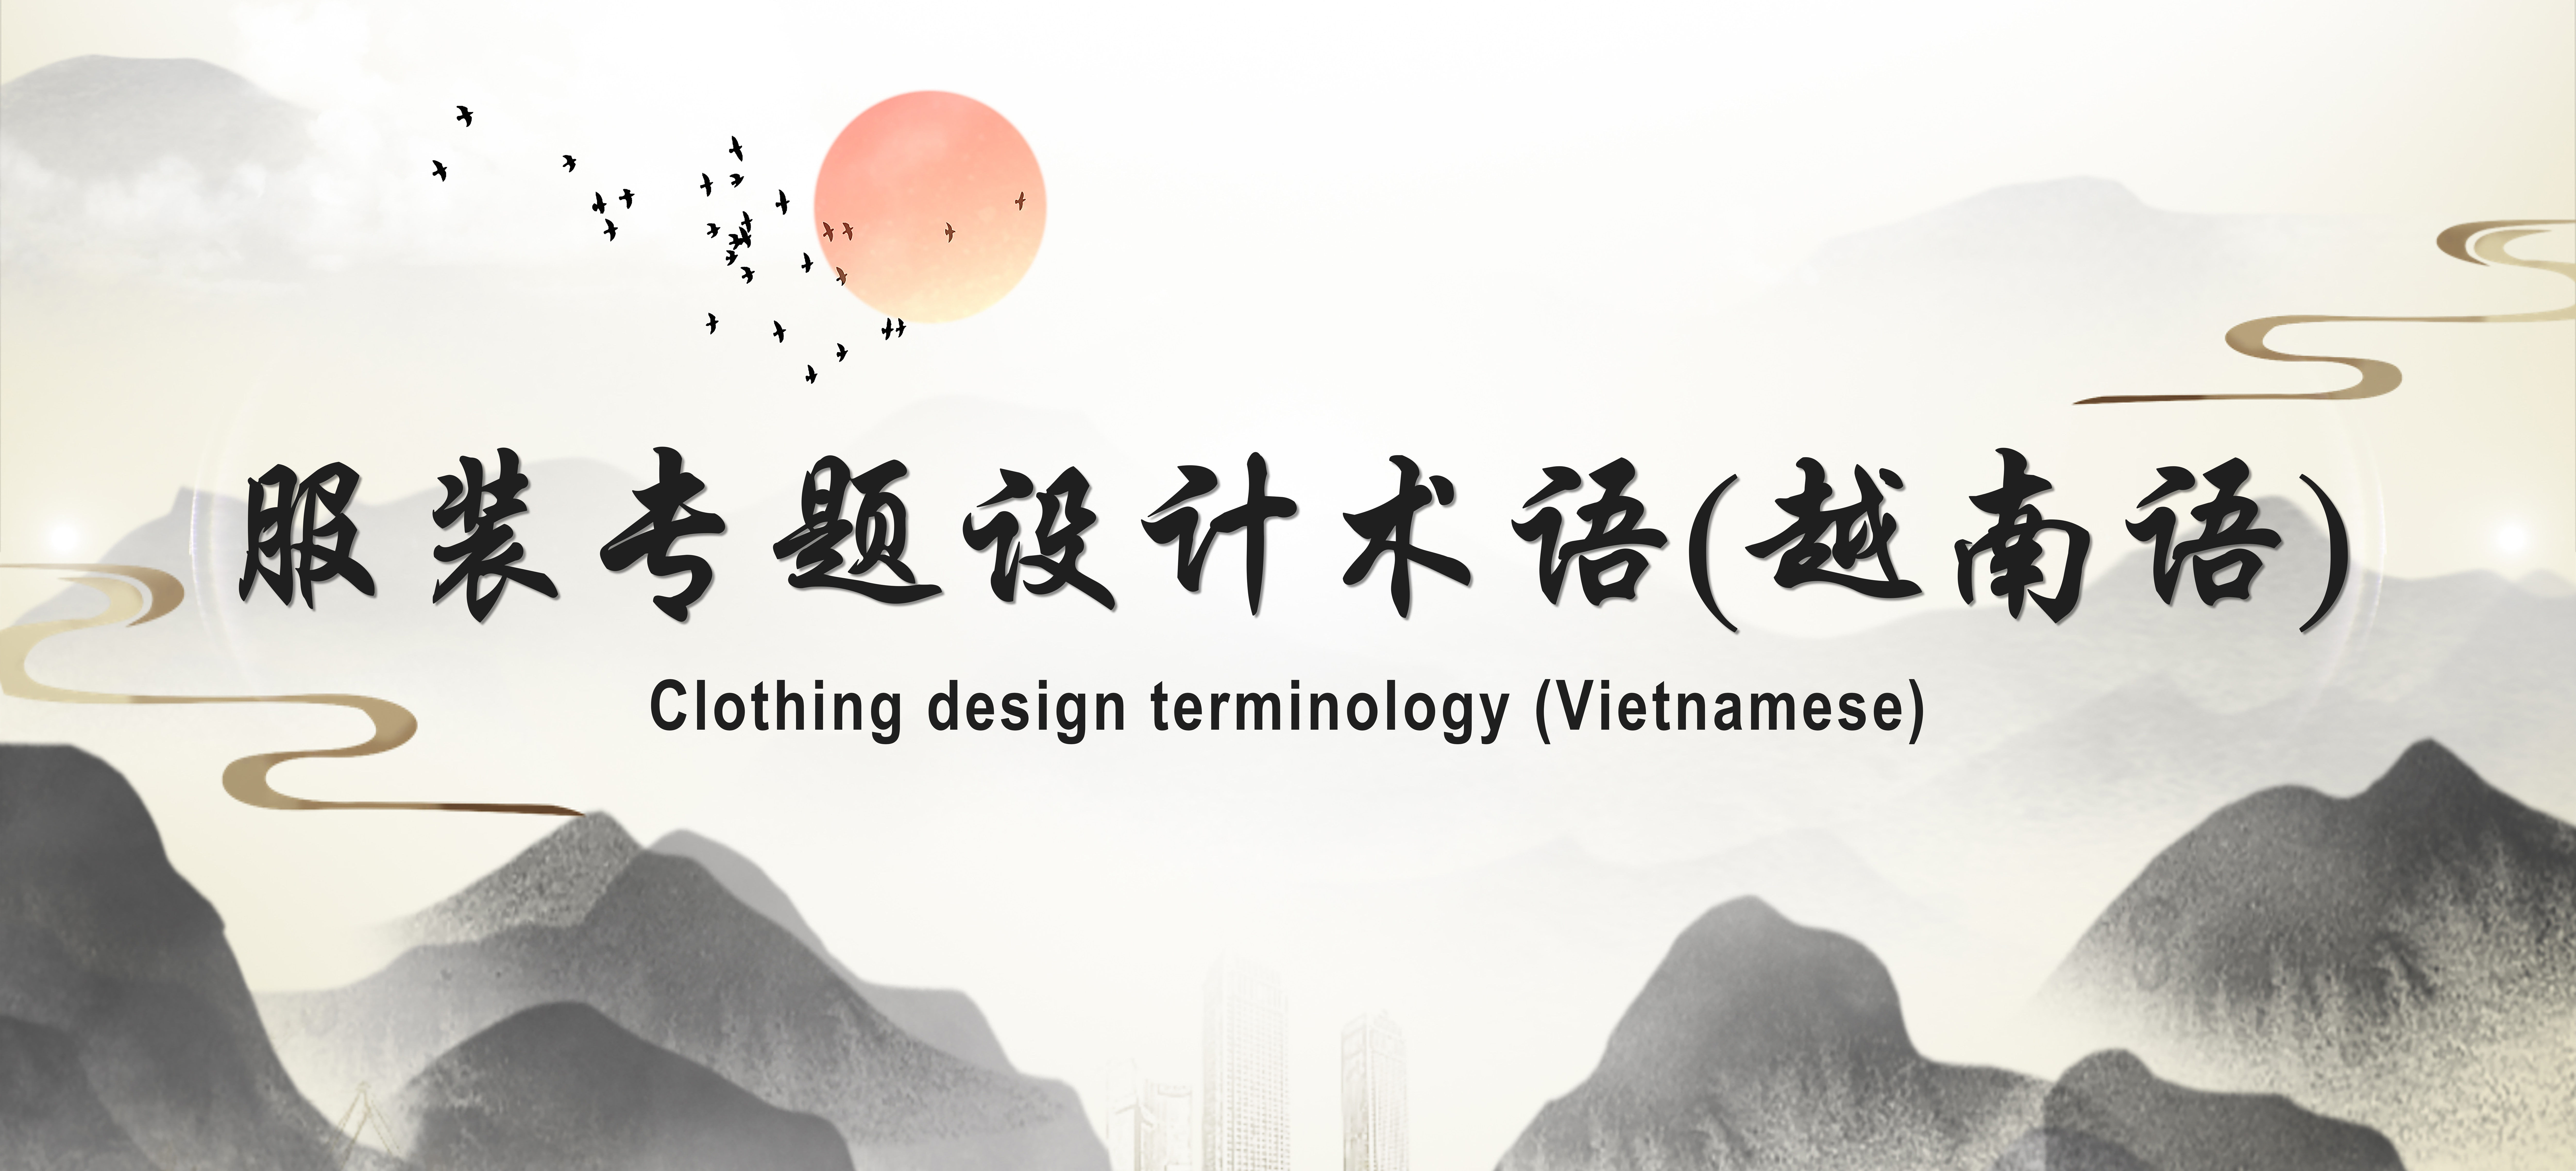 Clothing design terminology (Vietnamese)